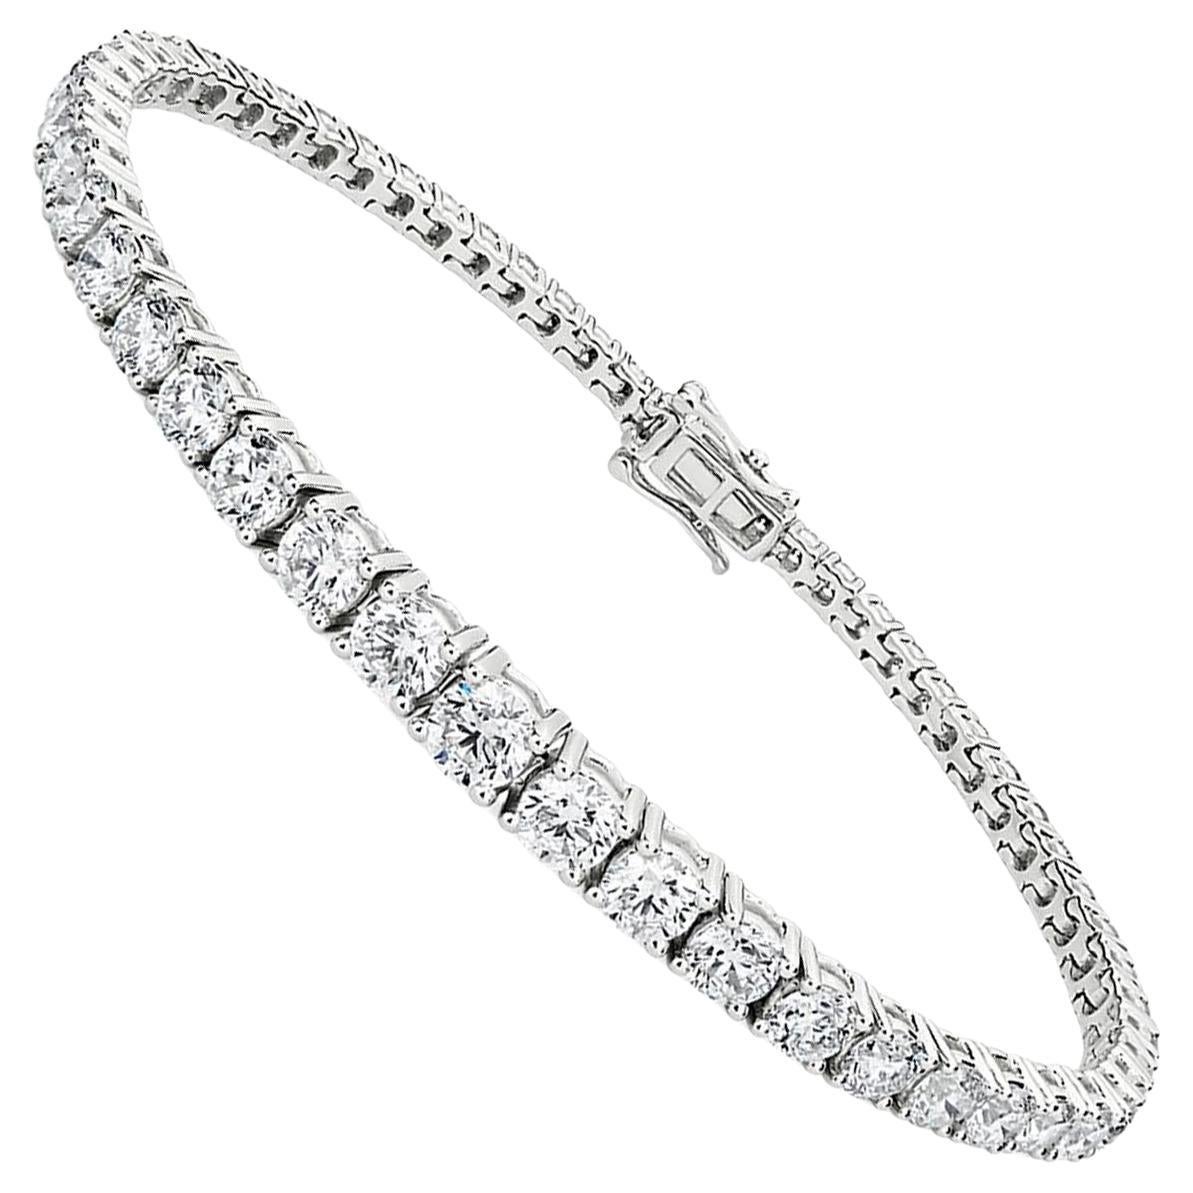 9 Carat Natural Round Cut Diamond Tennis Bracelet Vvs1 4-Prong 18k White Gold